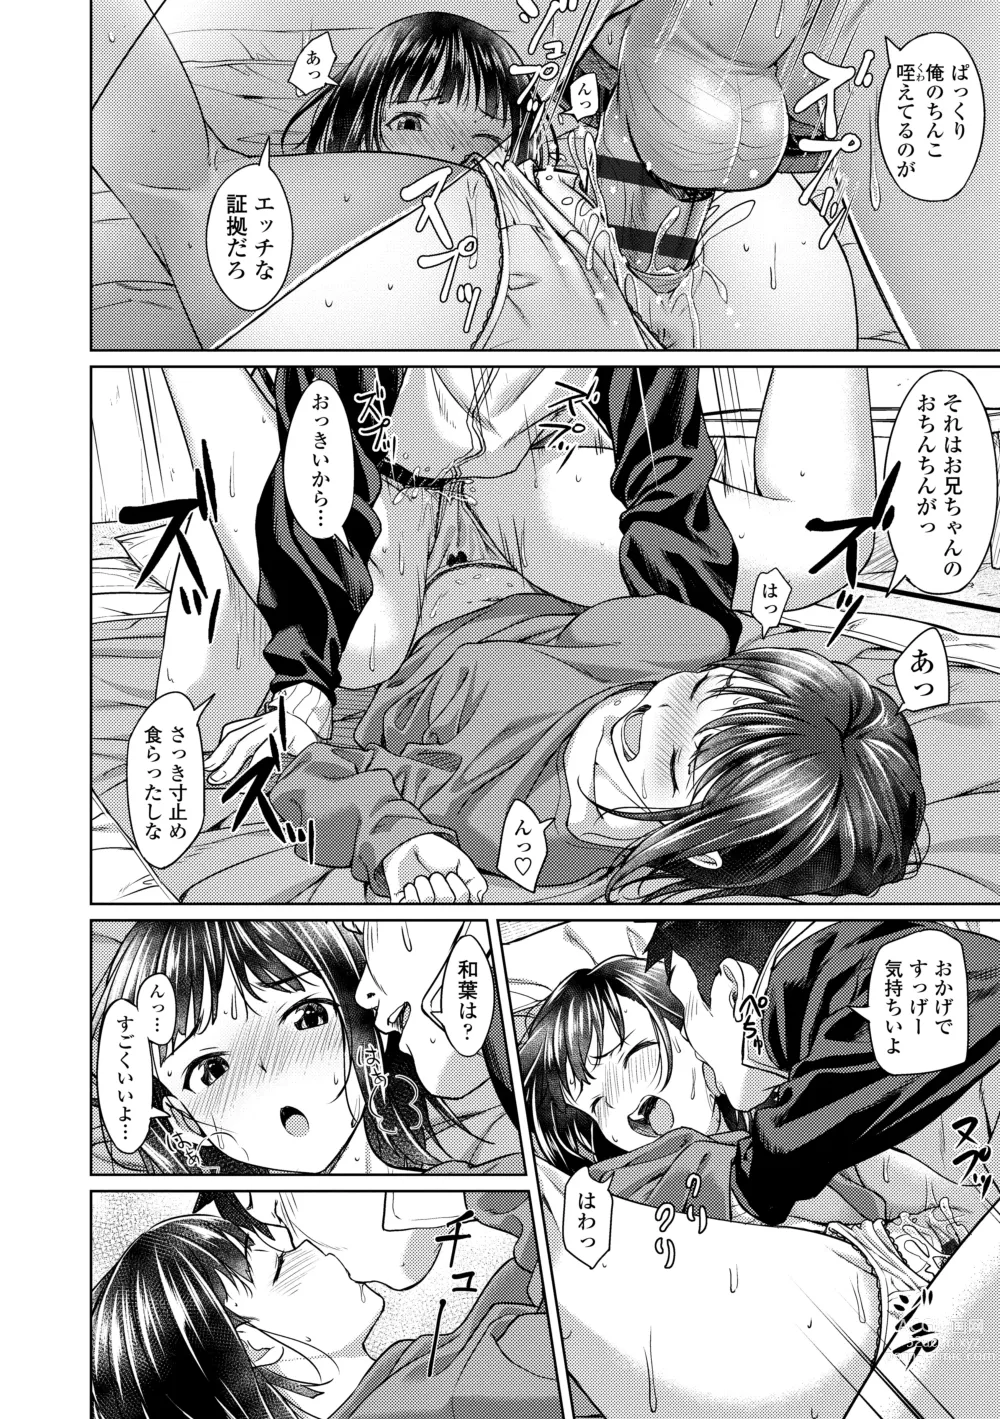 Page 20 of manga Aolove